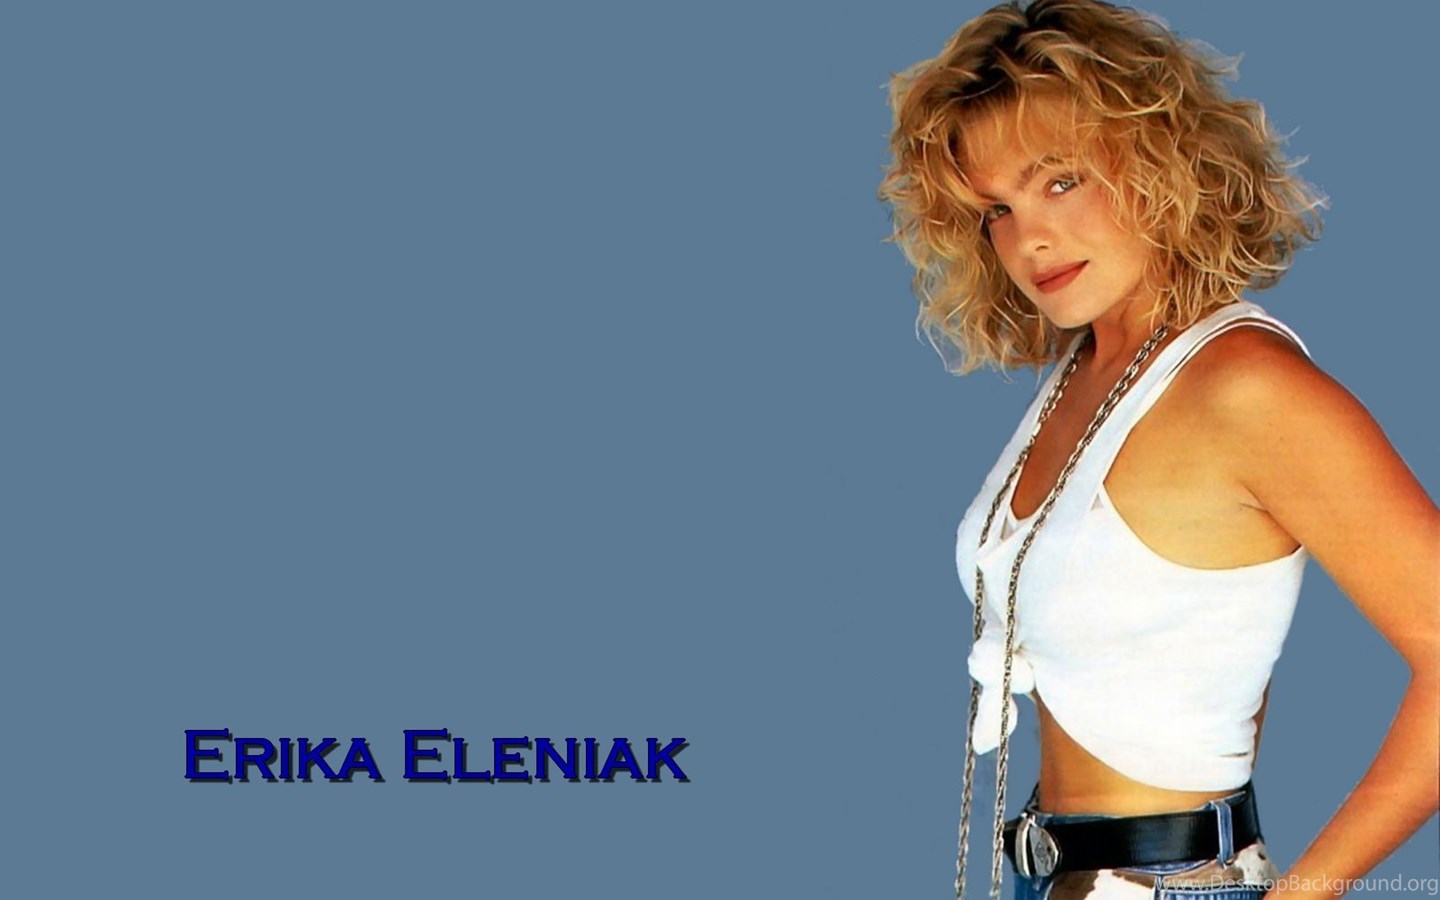 Download Wallpapers Erika Eleniak 1600x1000 Popular 1440x900 Desktop Backgr...